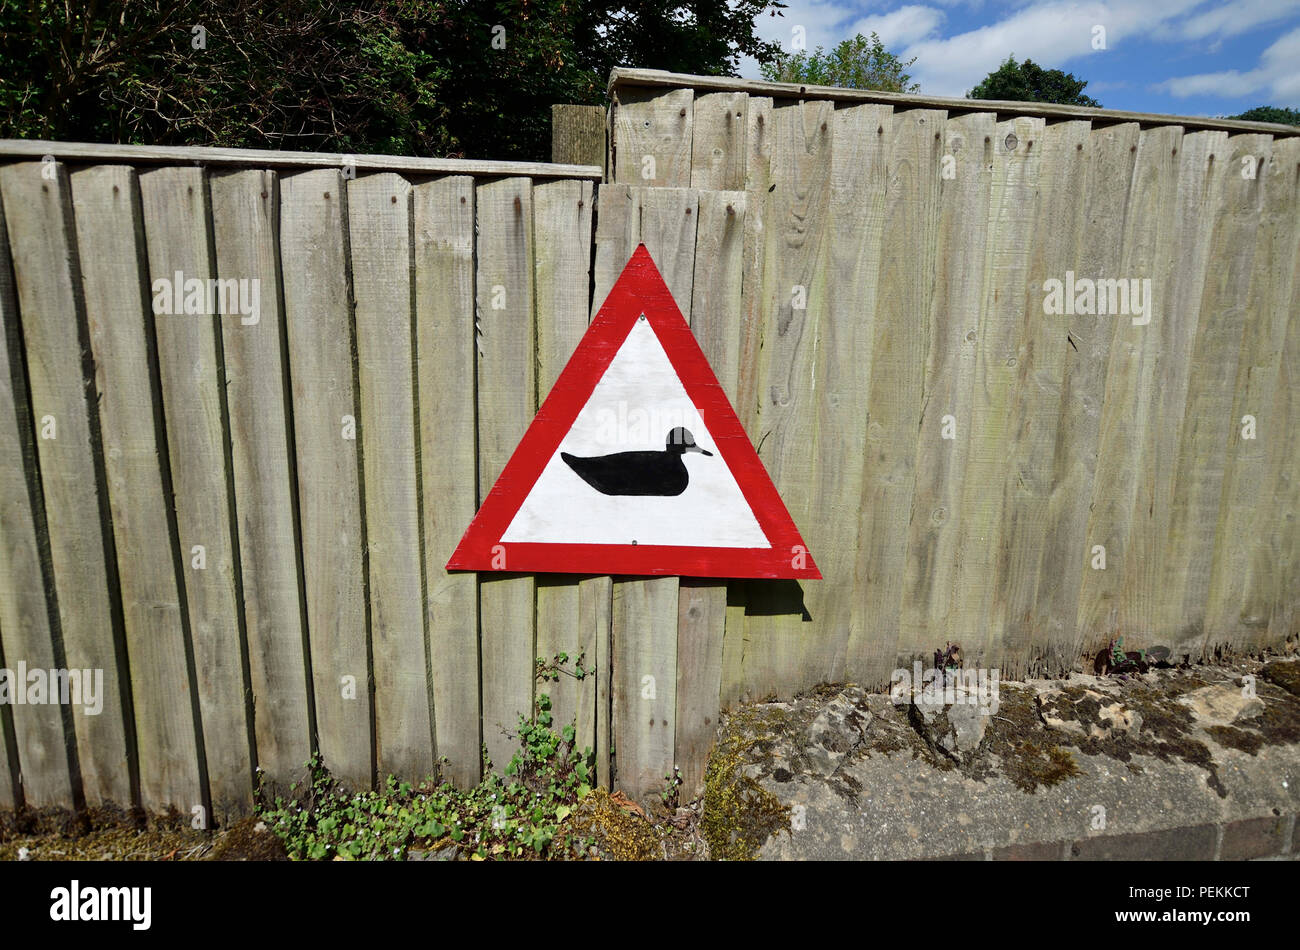 Beware ducks road sign in Loose Village, Maidstone, Kent, UK. Stock Photo